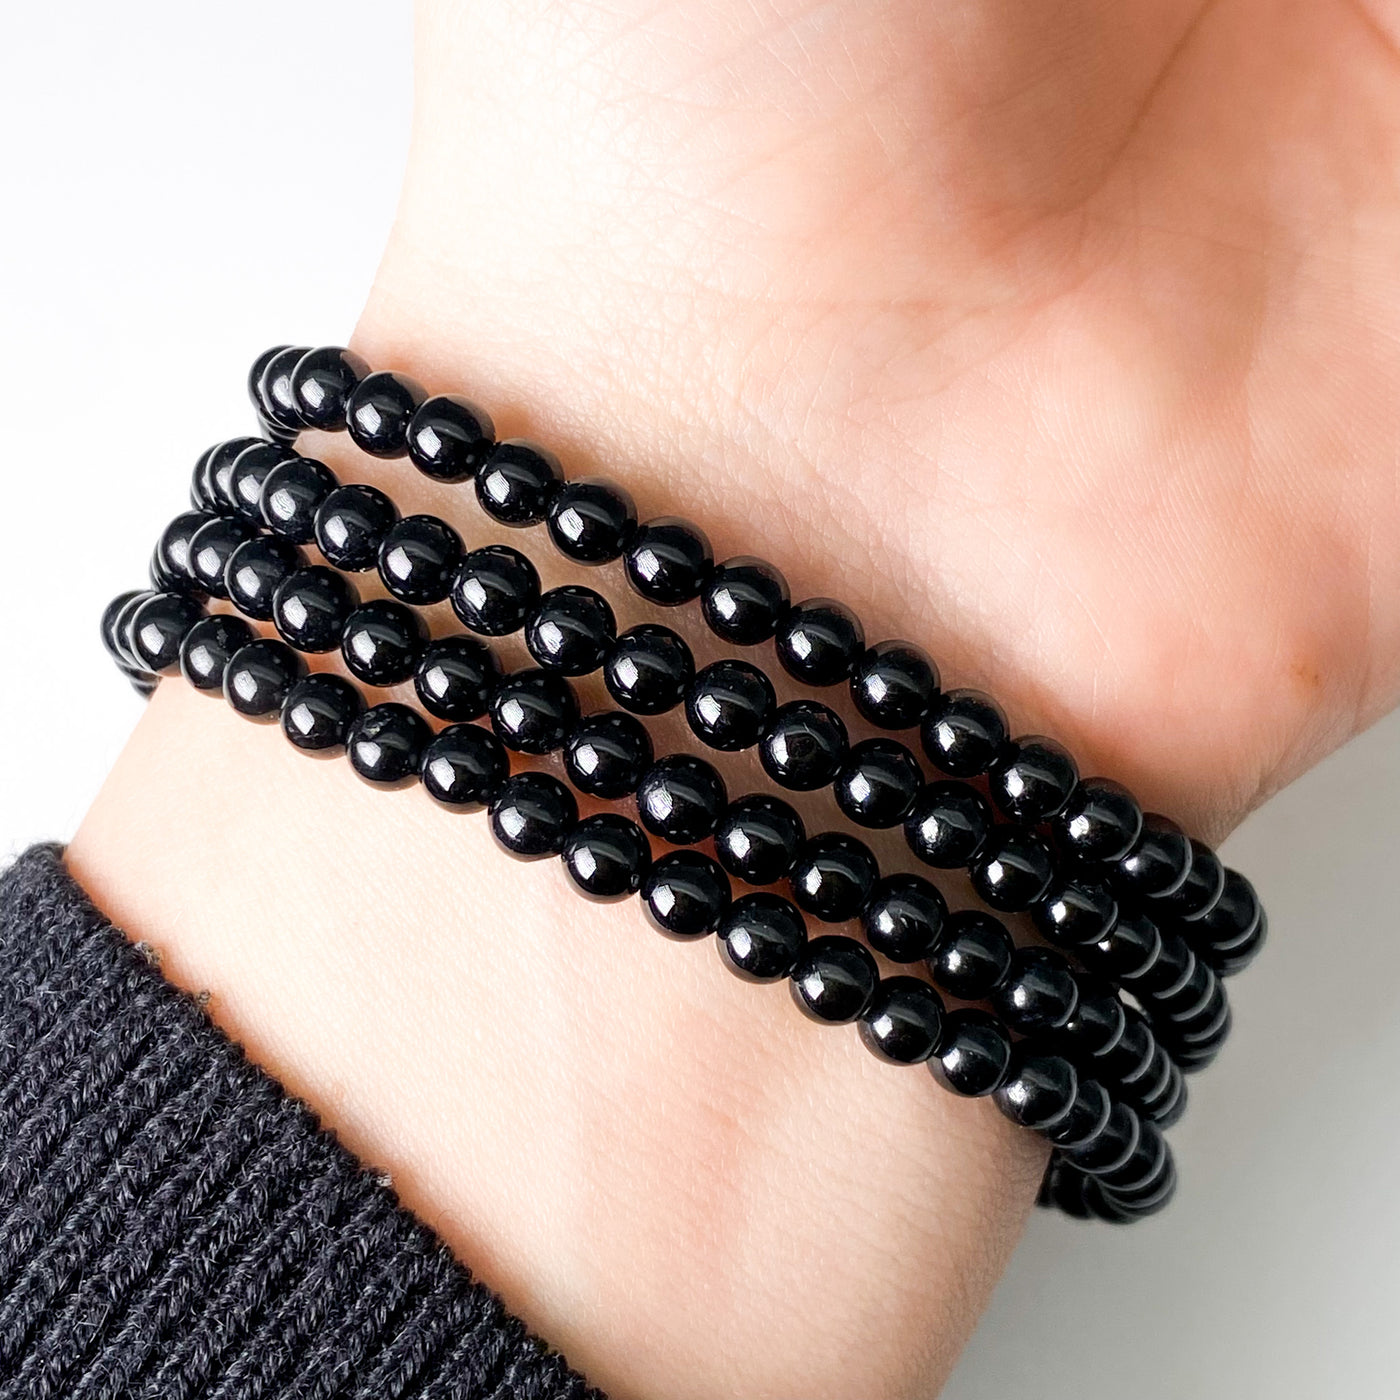 Obsidian bracelet